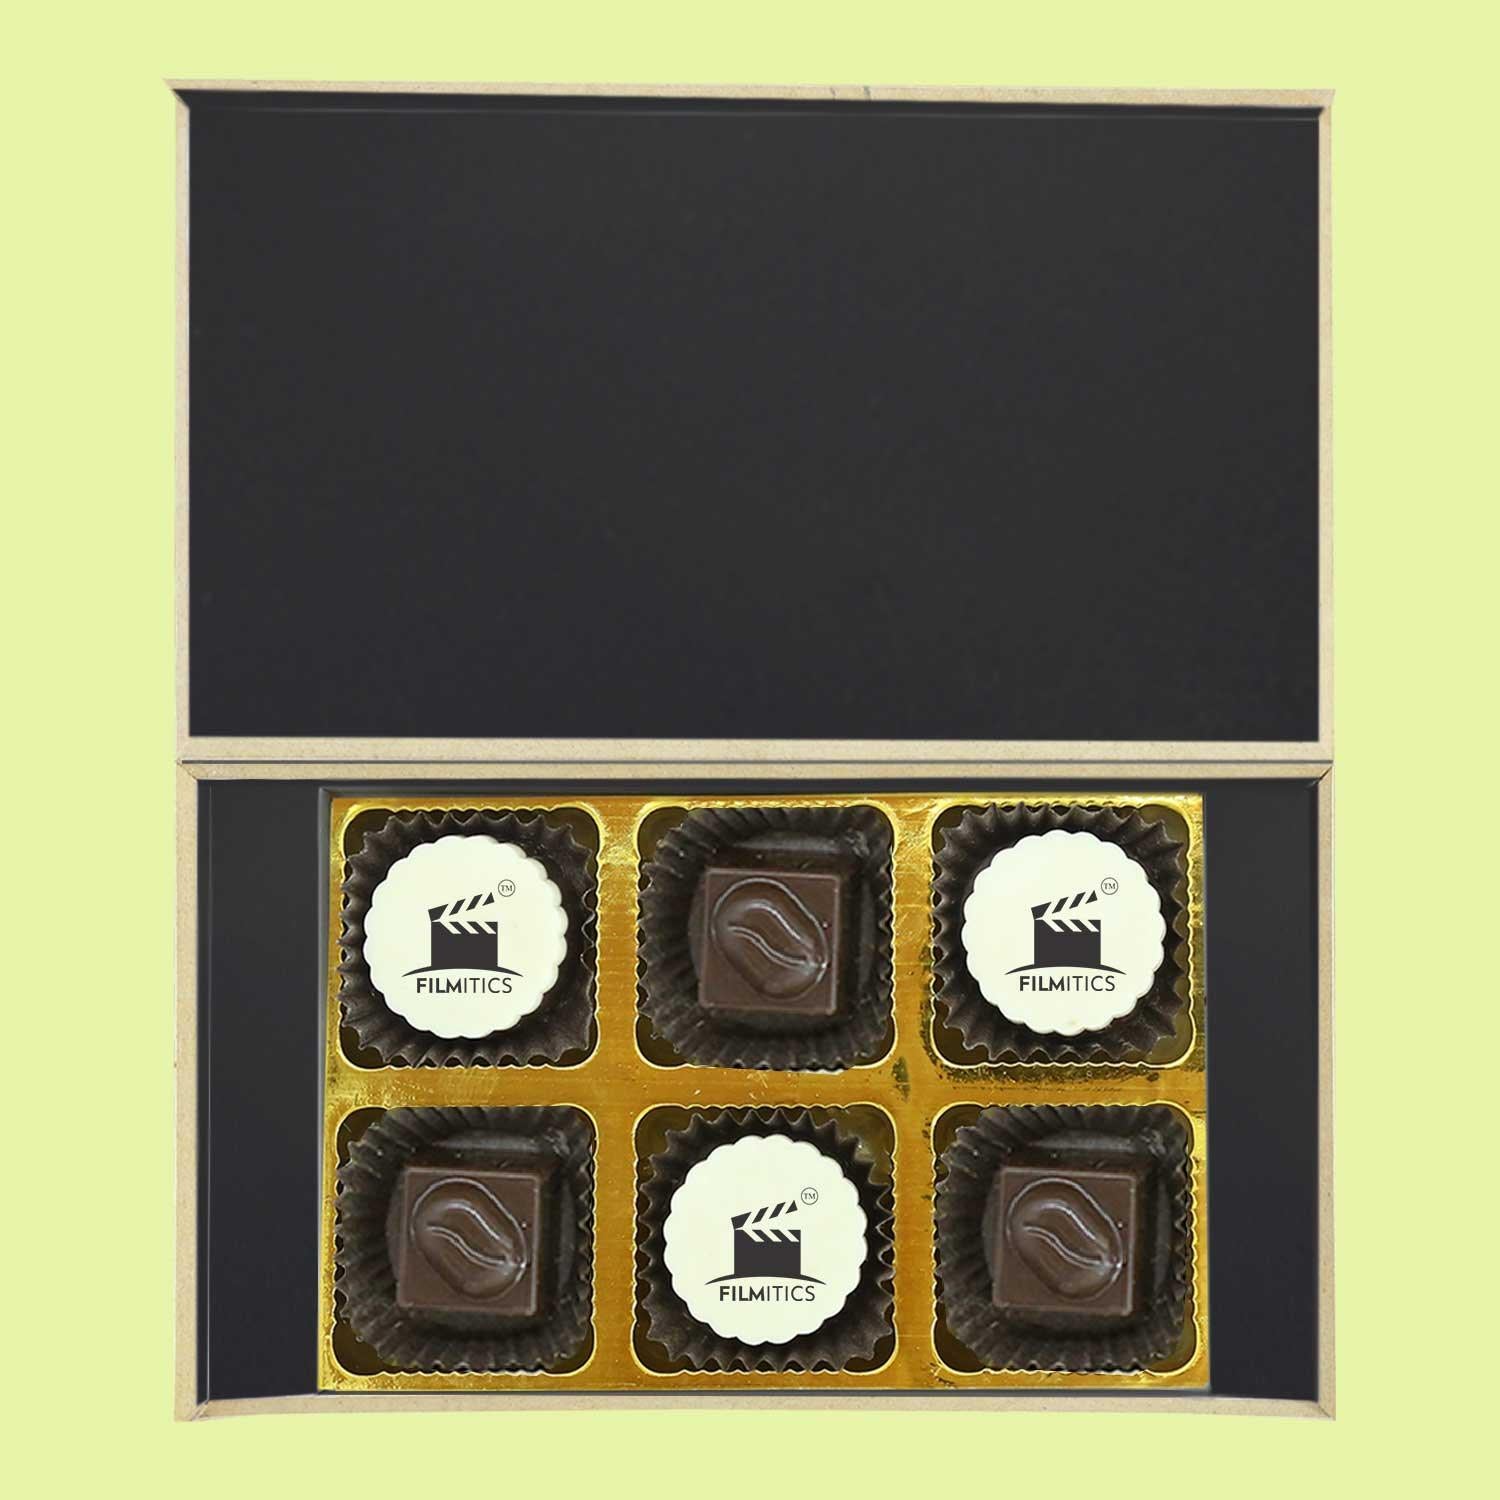 Peach flowers designed box of printed chocolates - Choco Manual ART